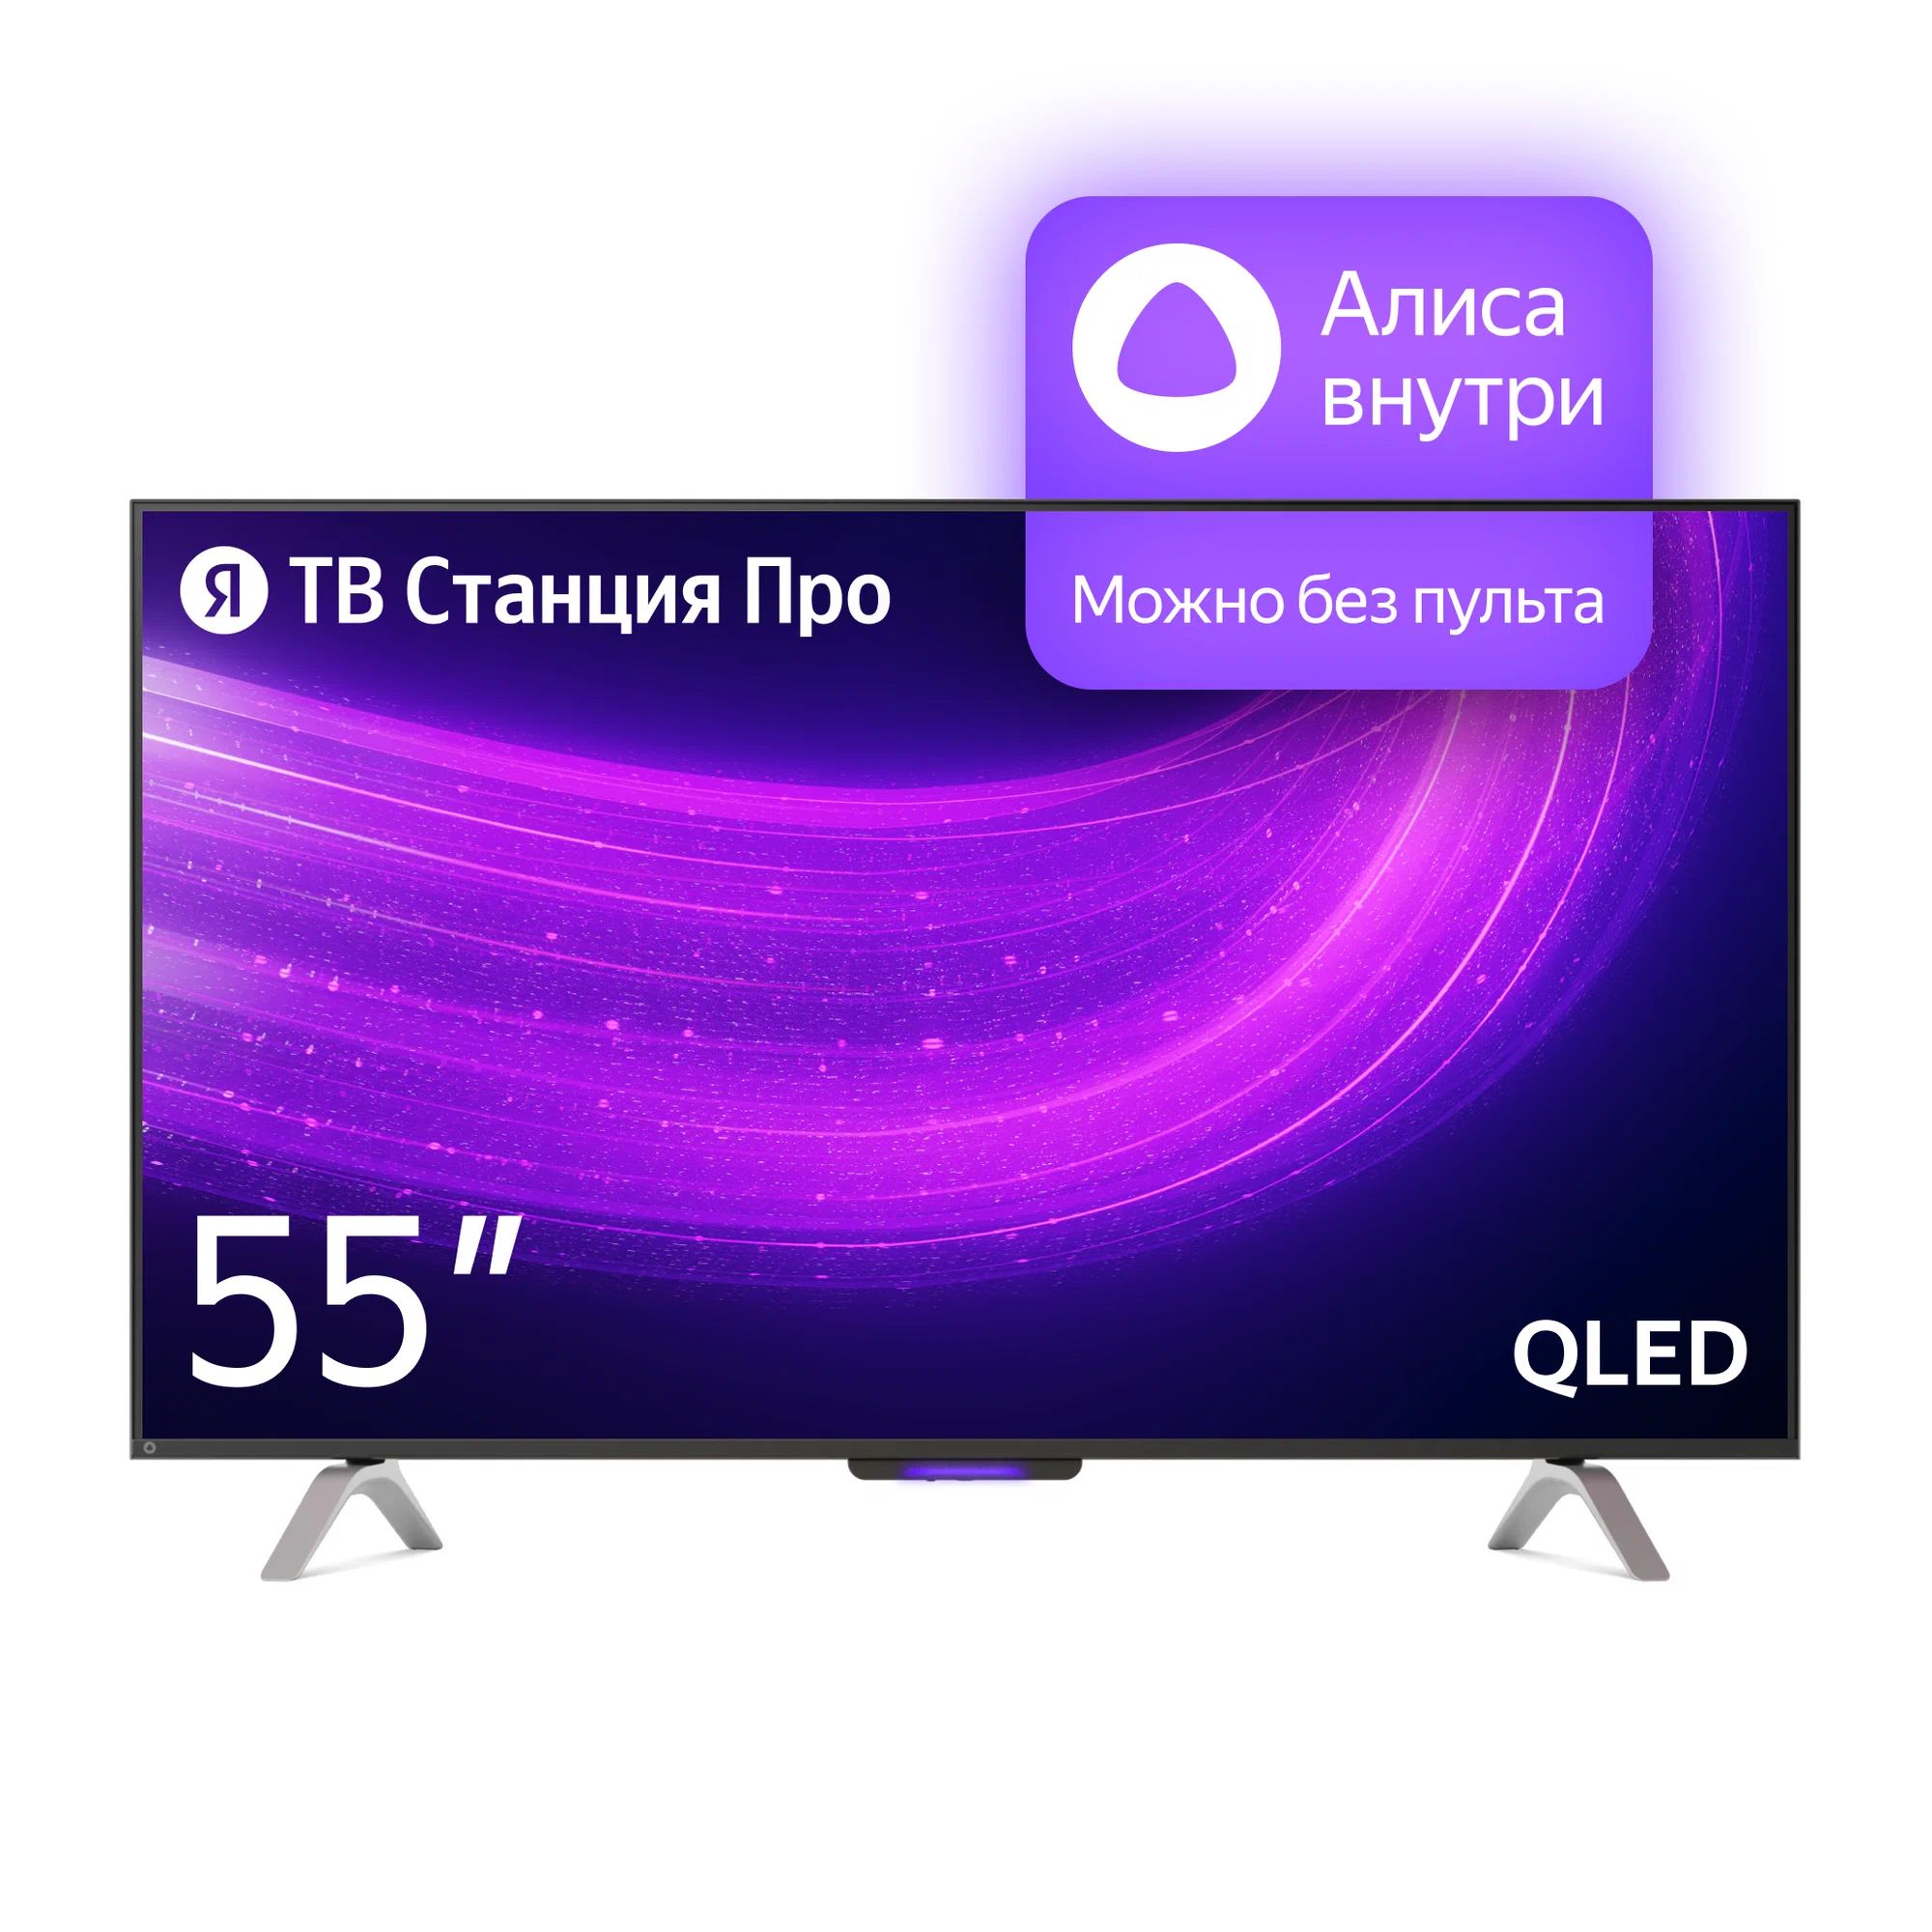 Телевизор Яндекс YNDX-00101 PRO Тв станция с Алисой 55 телевизор яндекс 50 тв станция с алисой 4к yndx 00092